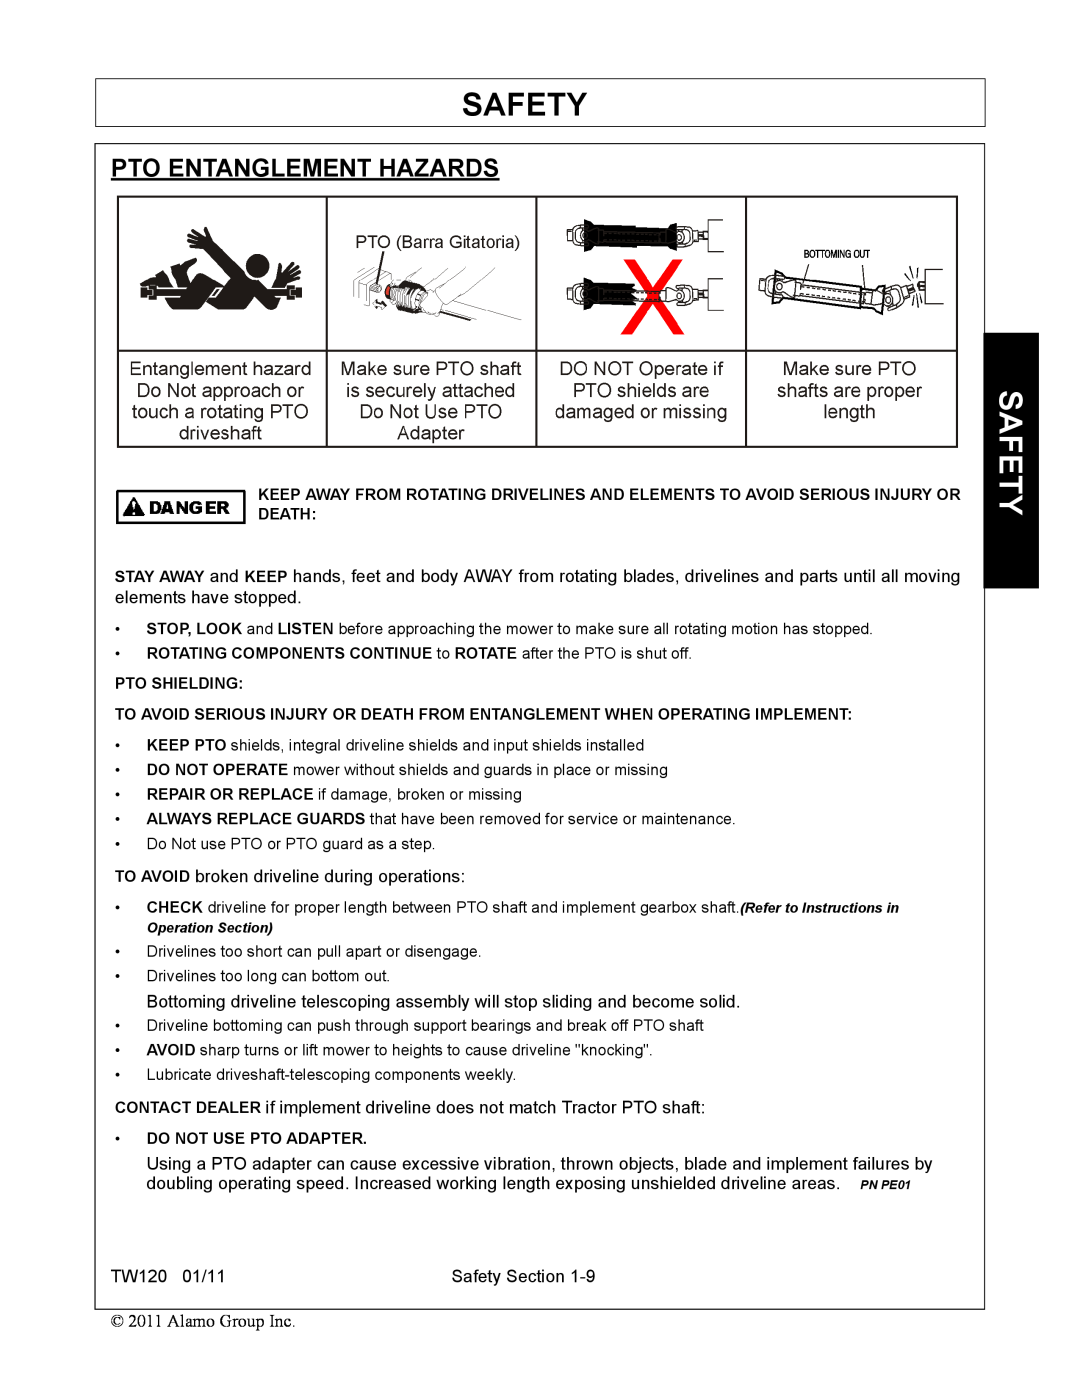 Blue Rhino FC-0025, FC-0024 manual Pto Entanglement Hazards, Safety 